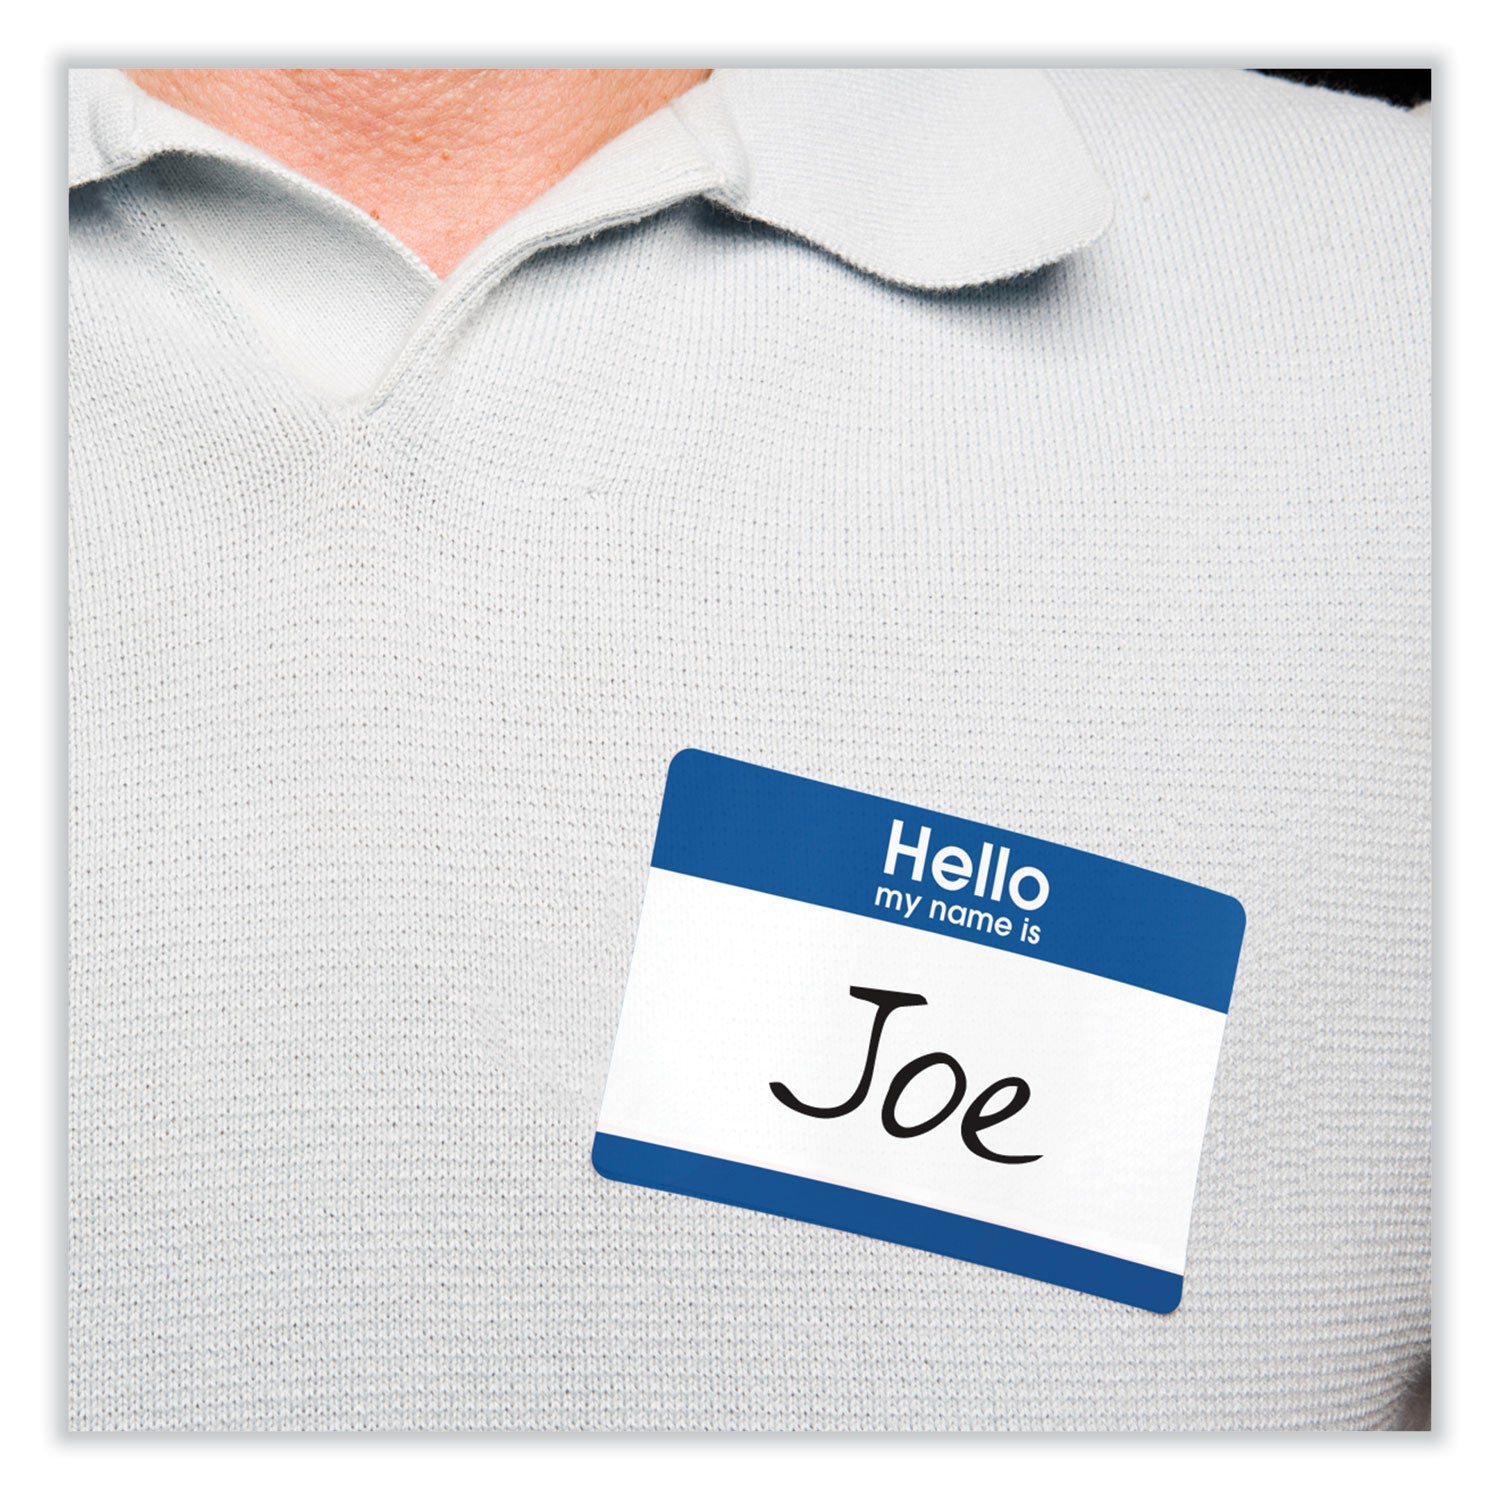 Printable Adhesive Name Badges, 3.38 x 2.33, Blue "Hello", 100/Pack - 